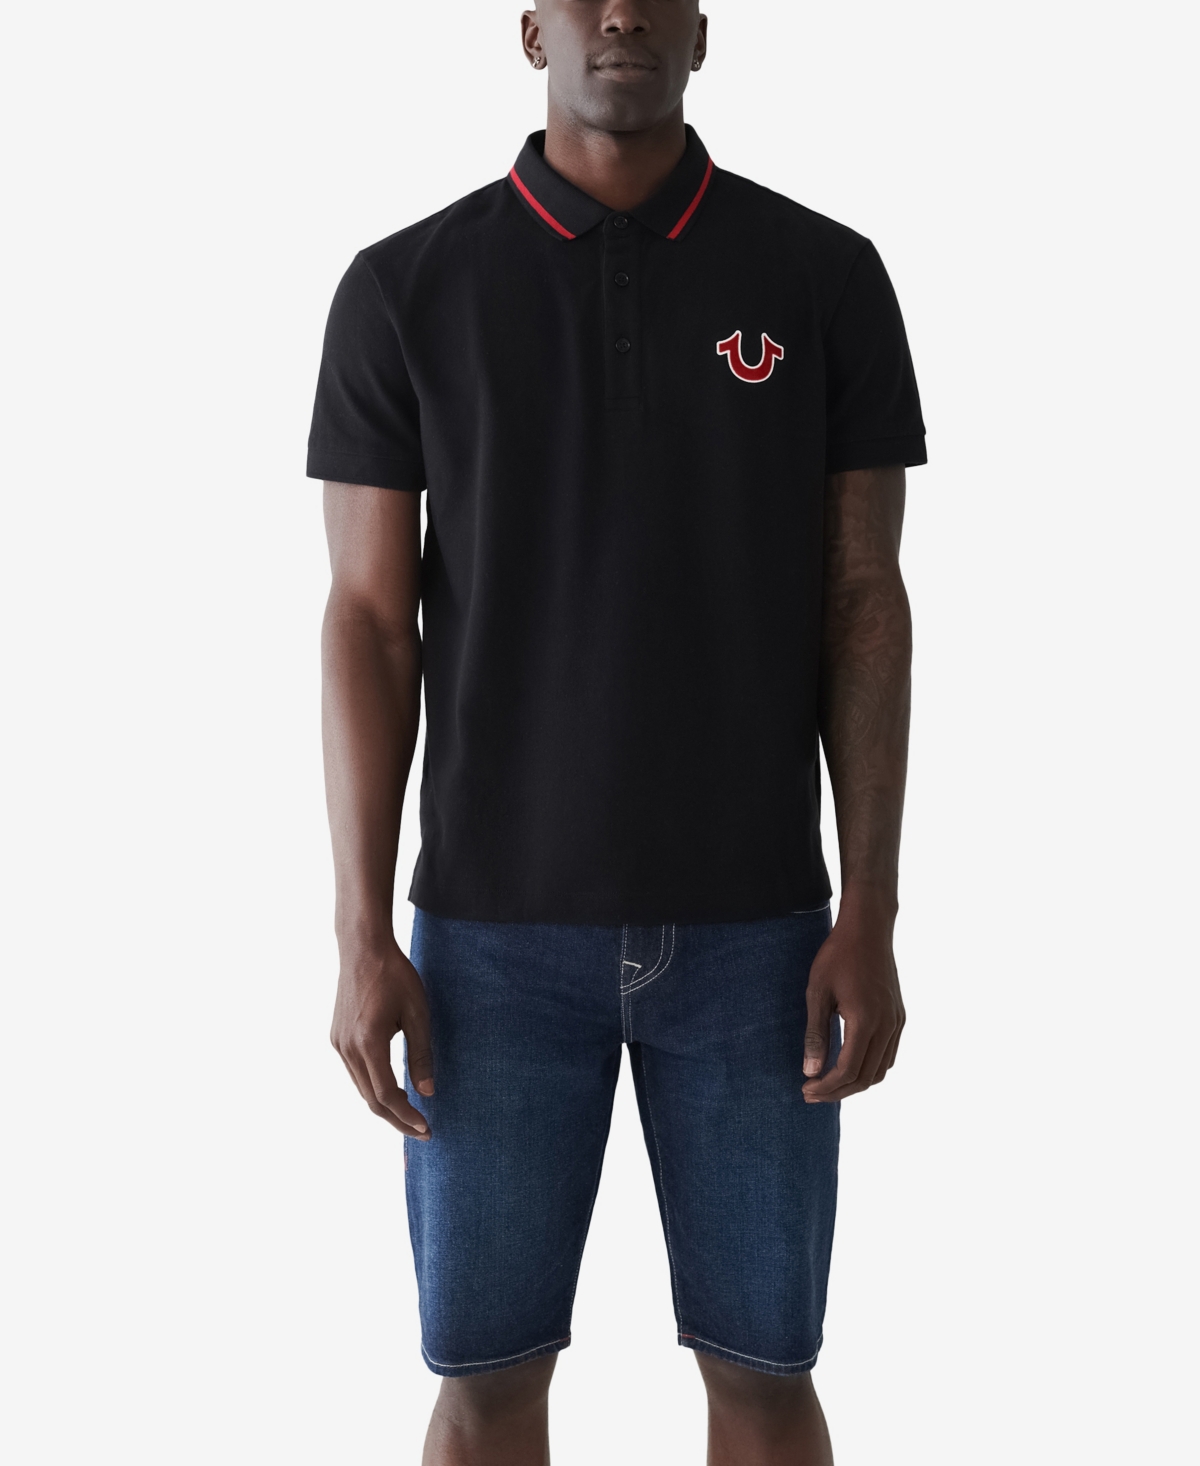 True Religion Short Sleeve Jv7 Polo T Shirt Black